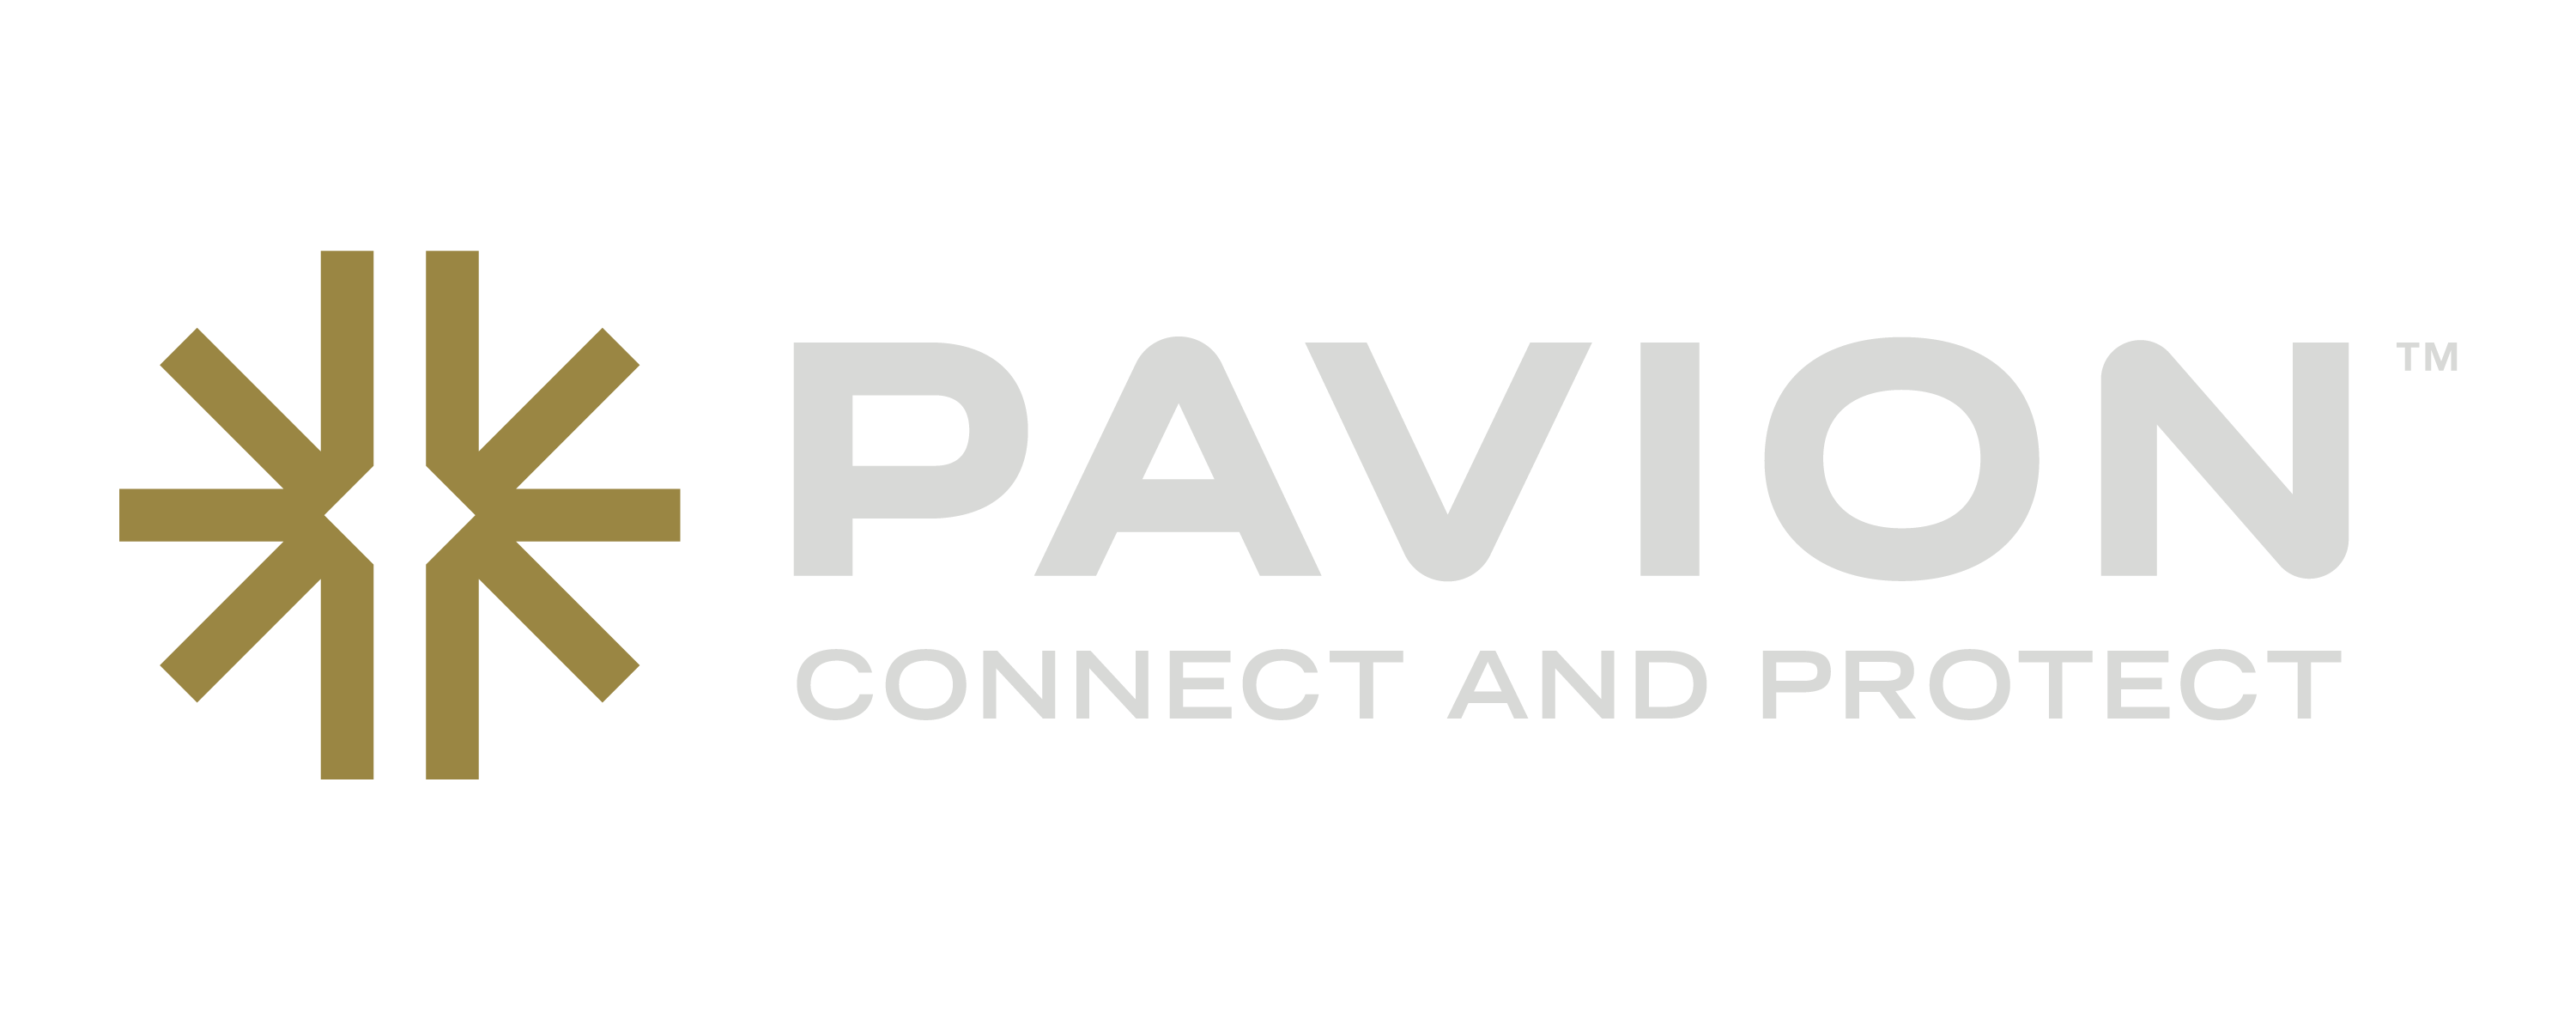 pavion_tagline_logo_horizontal_grey